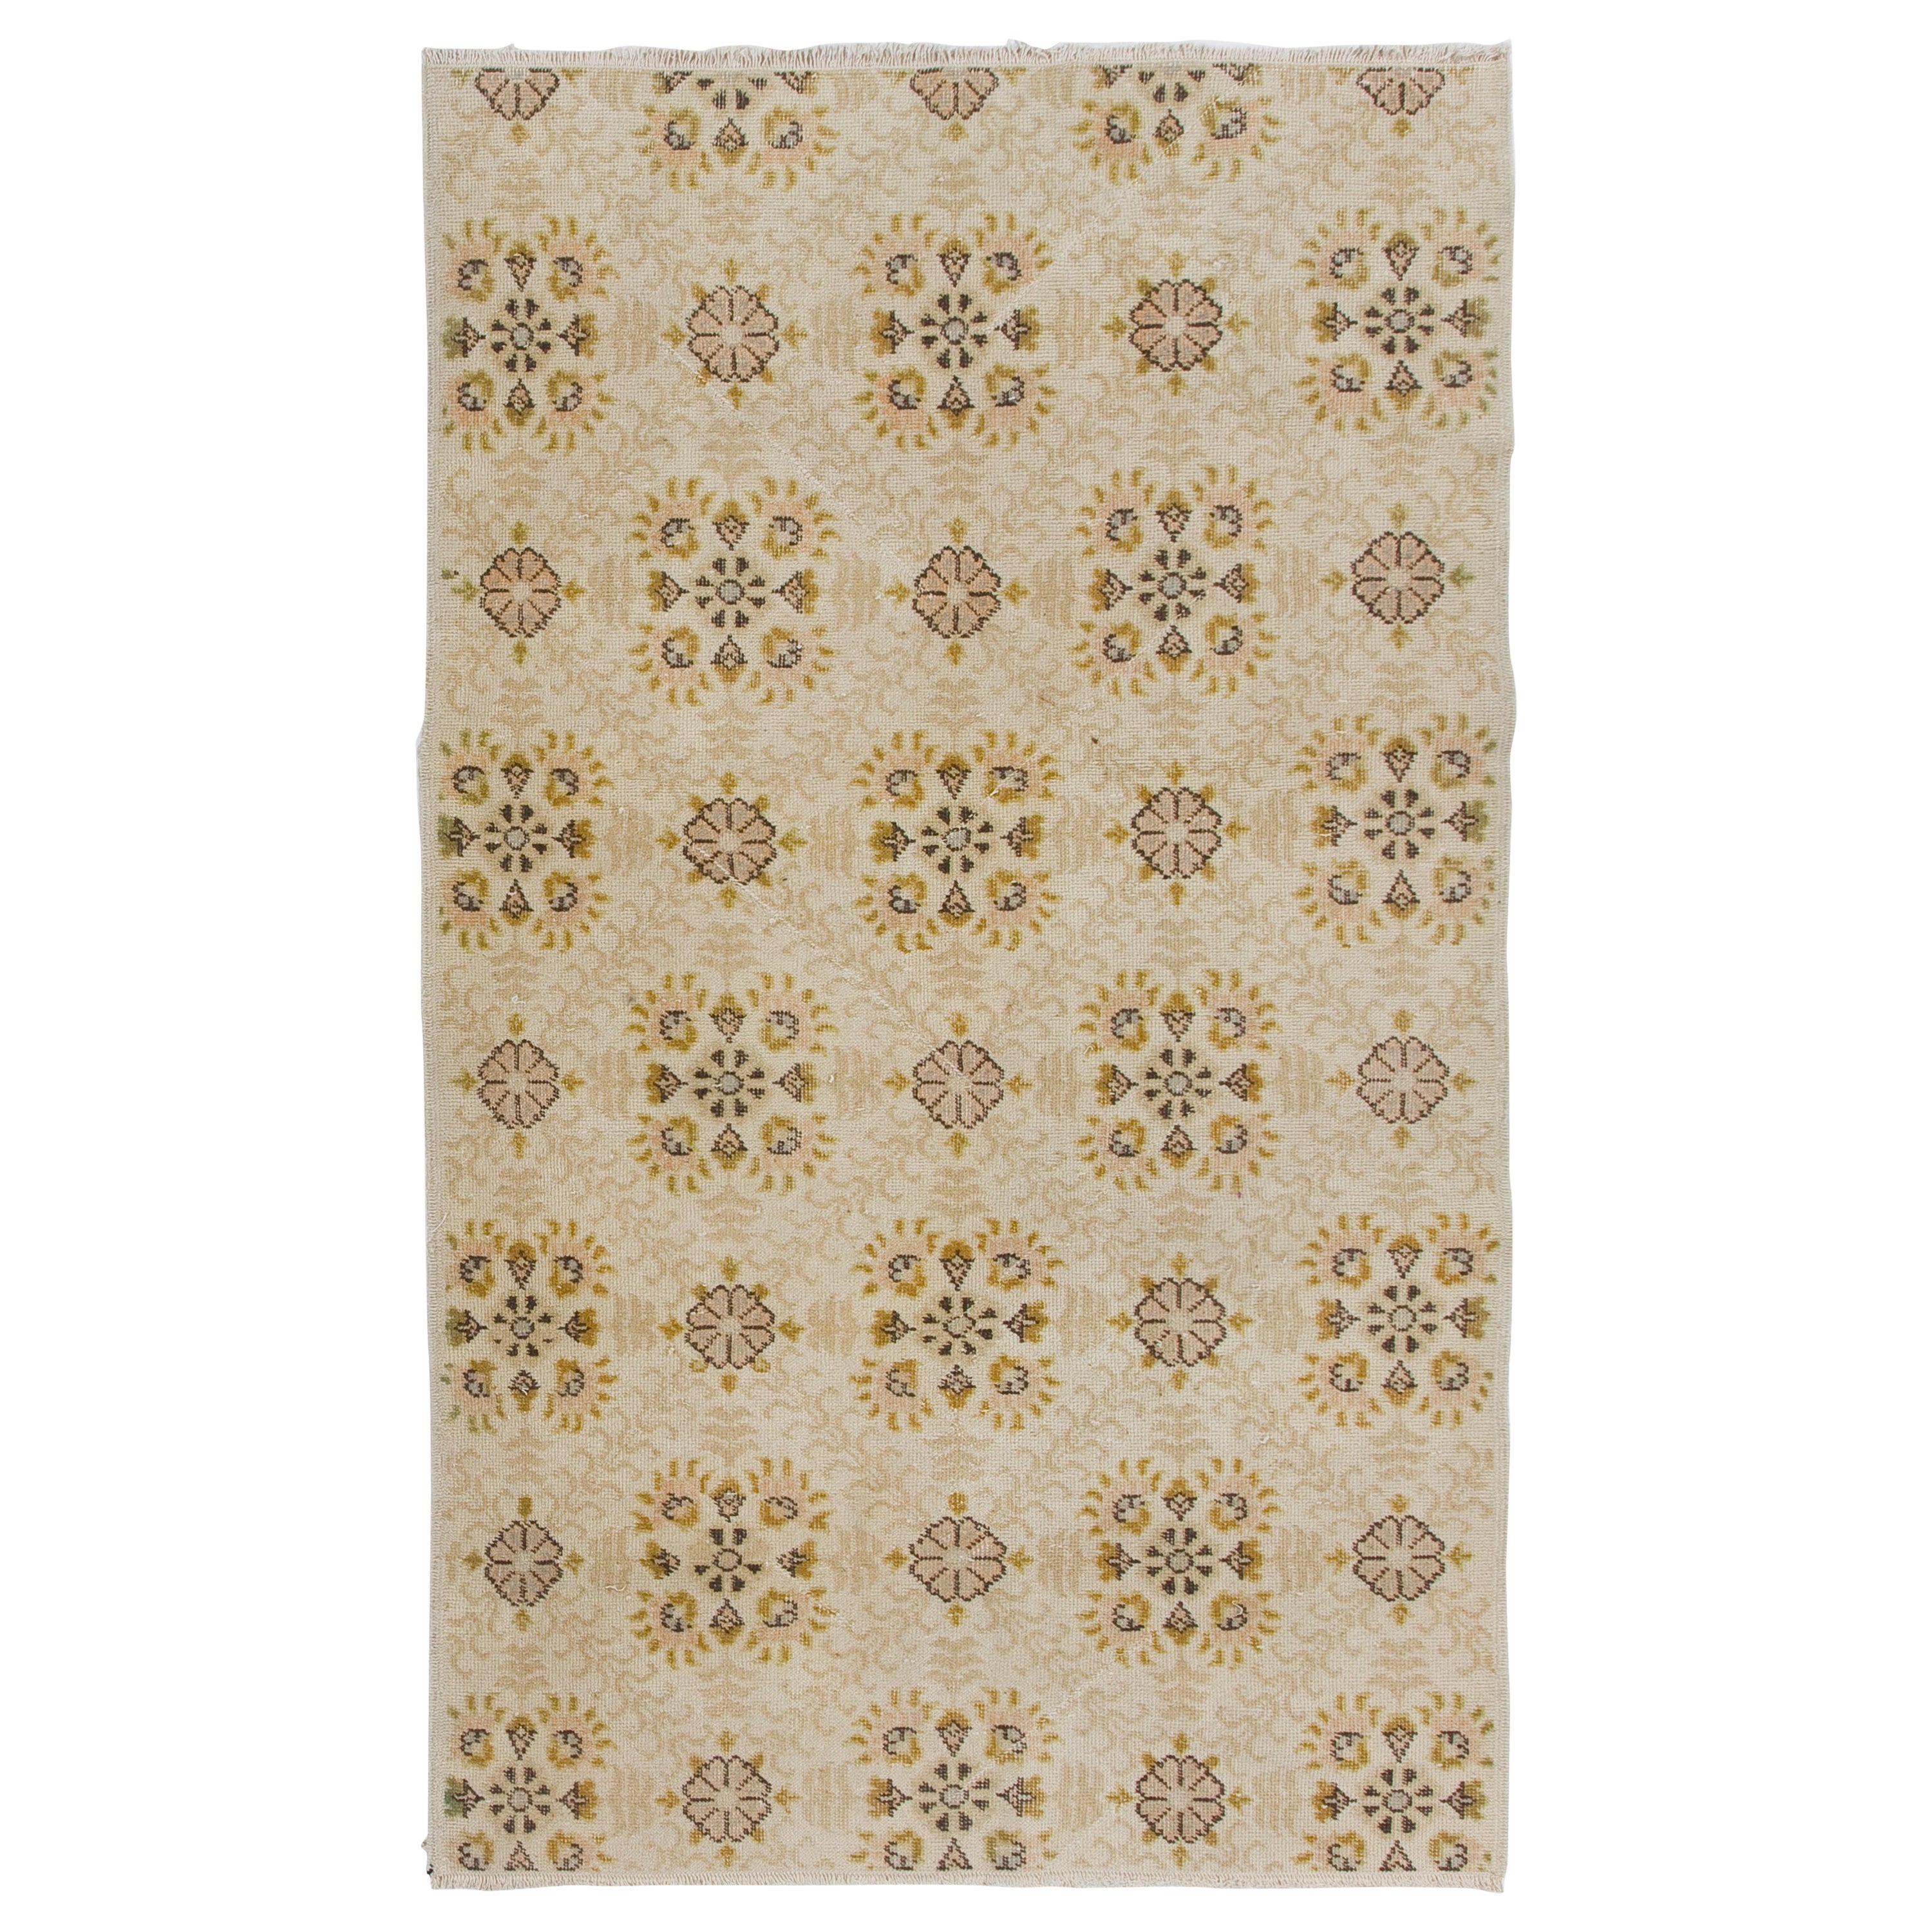 4x7 Ft Vintage Turkish Deco Wool Rug, Handmade Floral Patterned Small Carpet